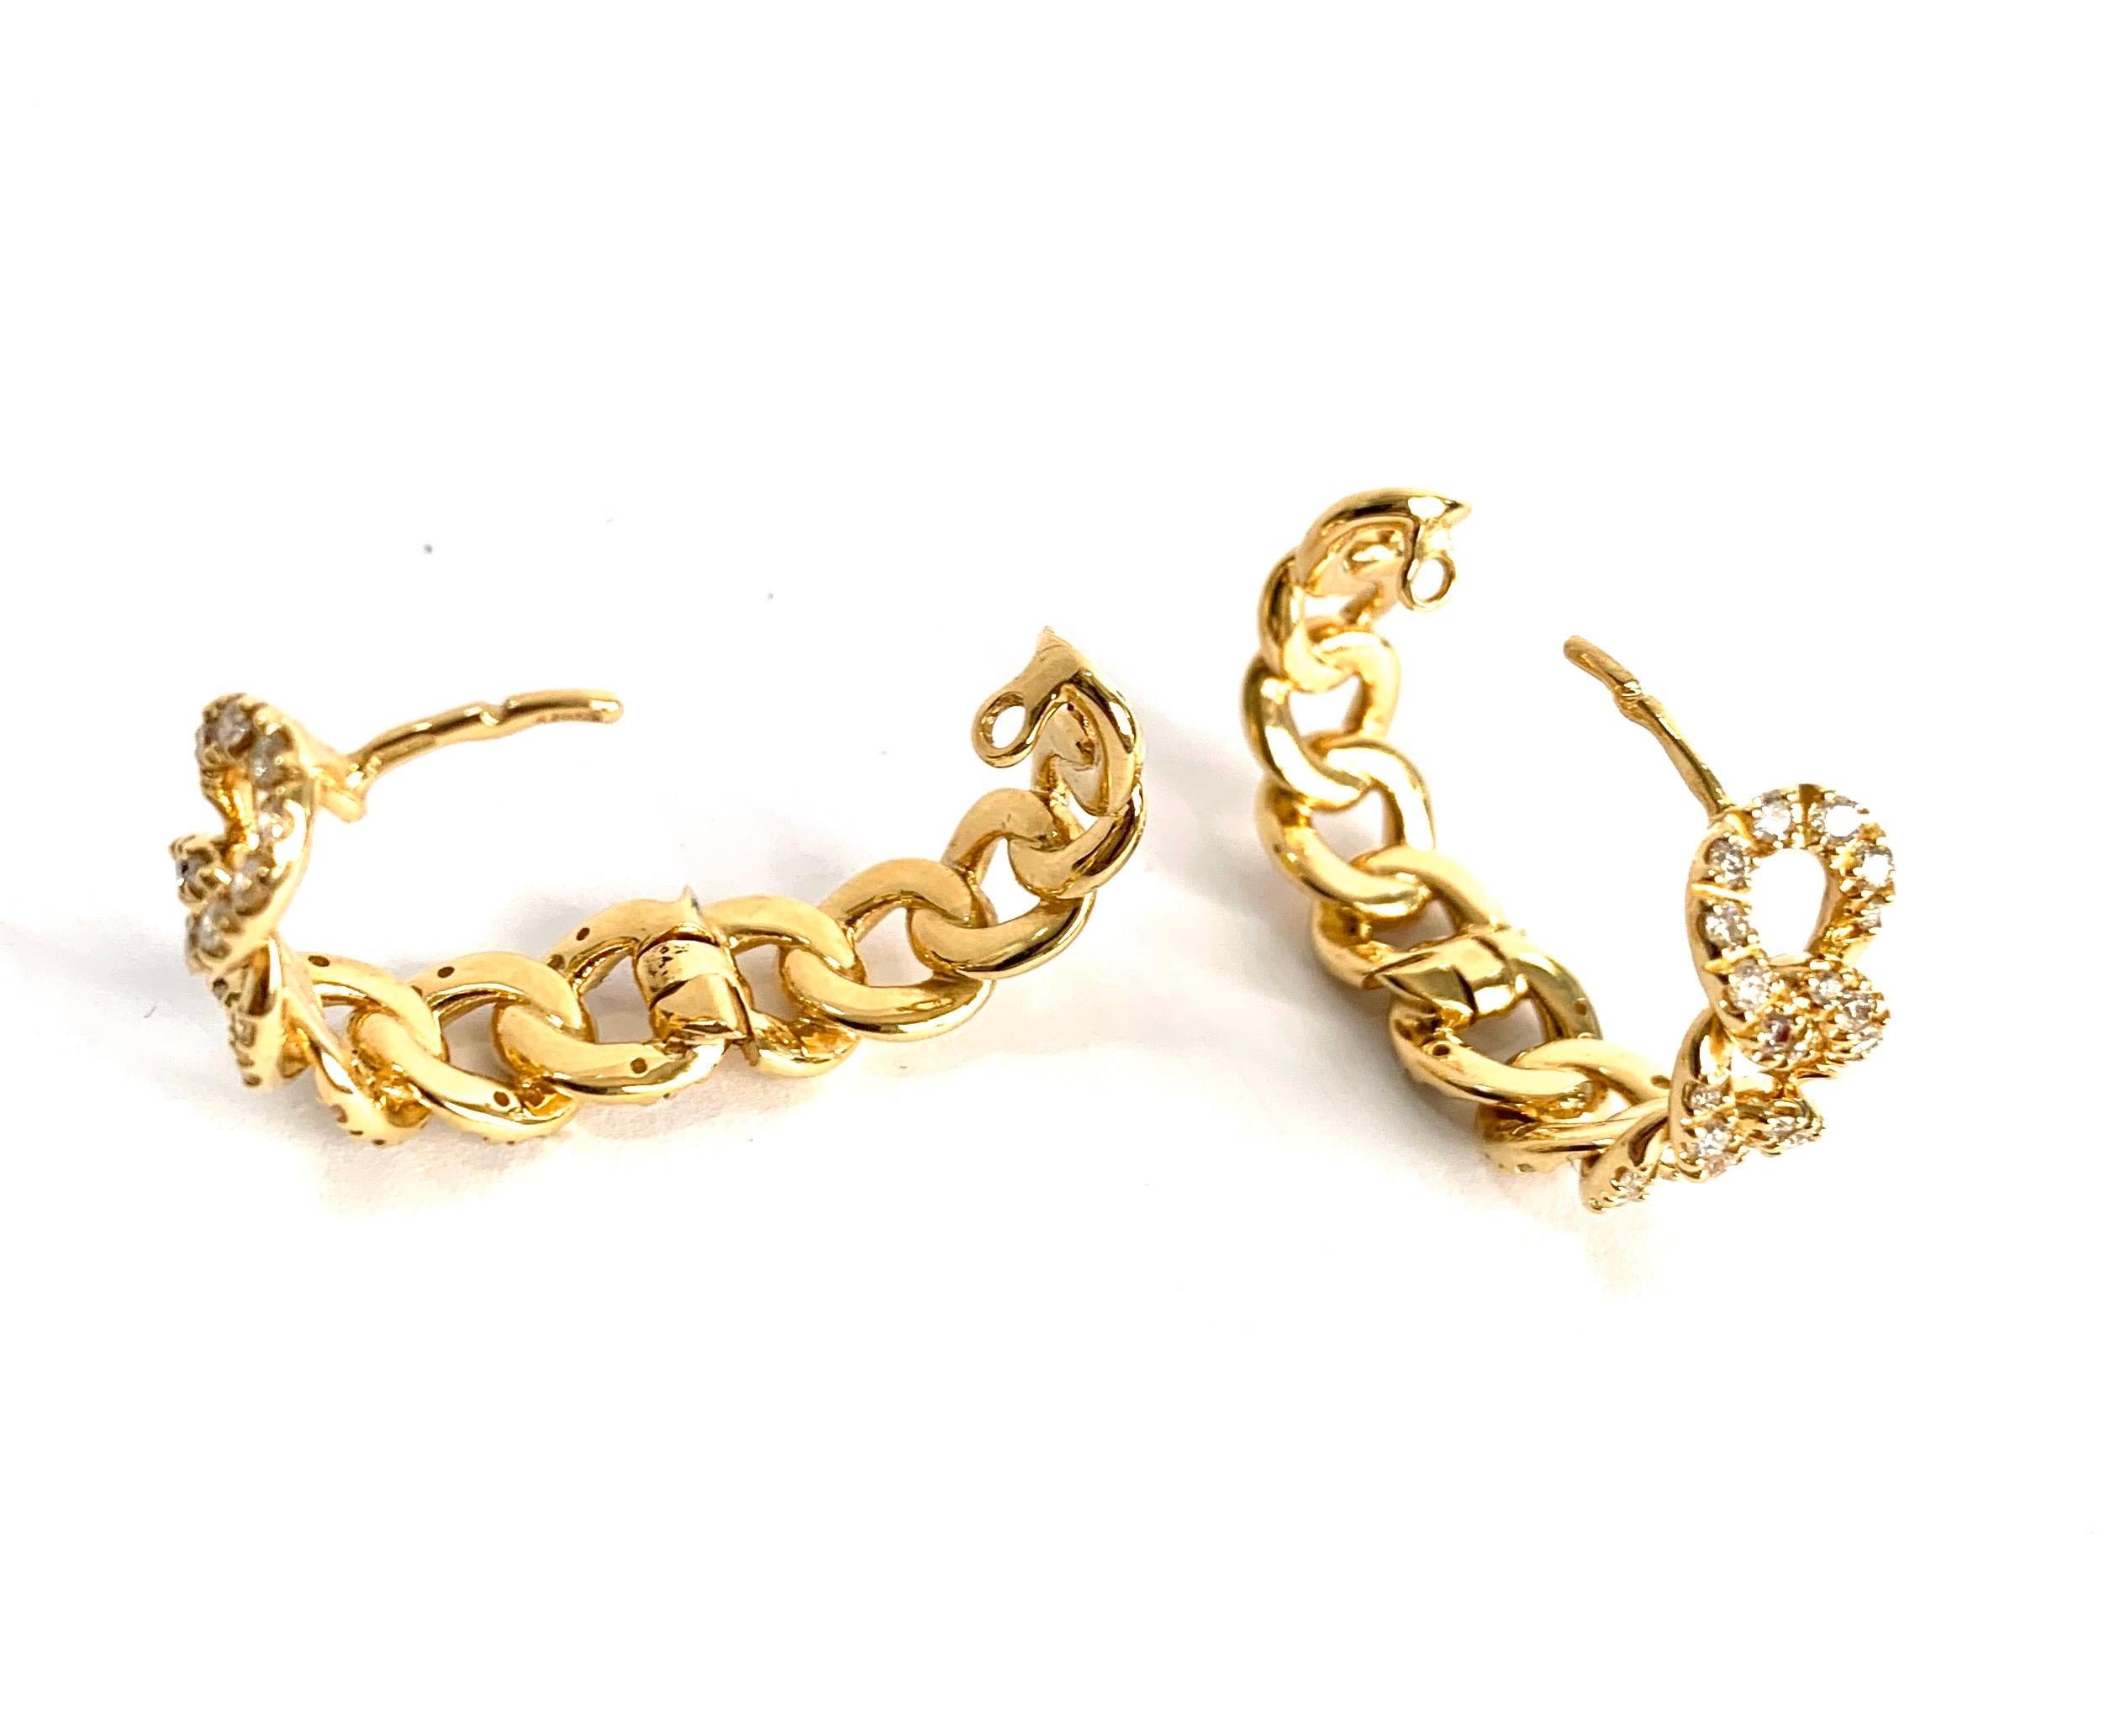 Cuban Yellow Earrings 18 Karat Gold Made in Italy 1